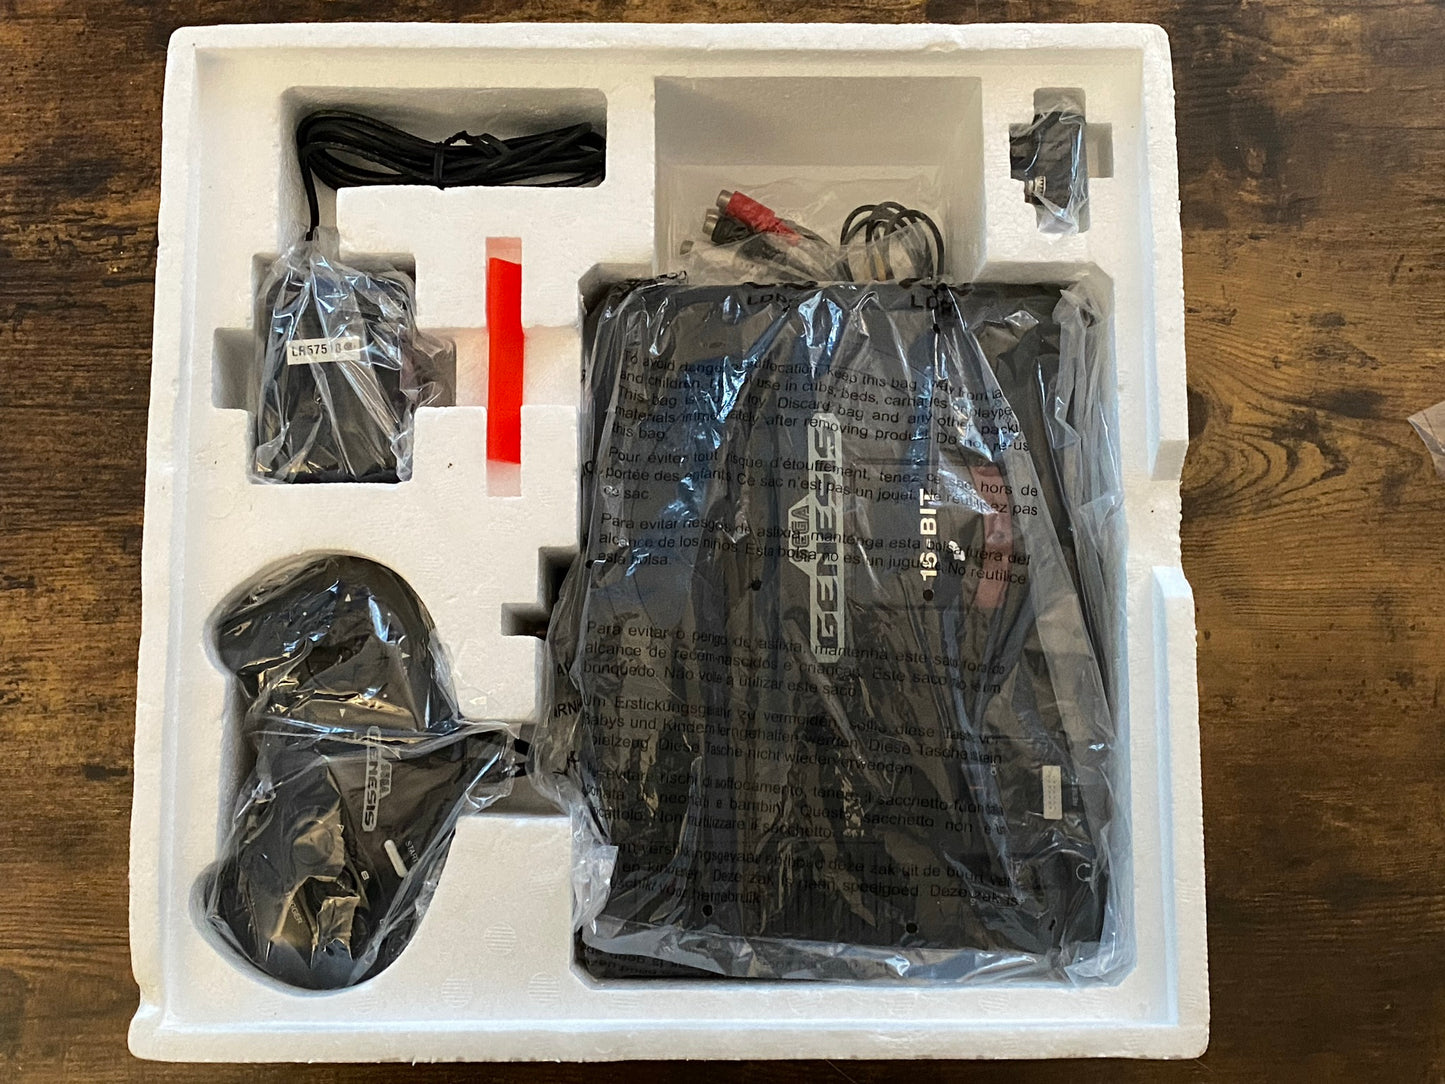 SEGA Genesis Console: Model 1 - In Box